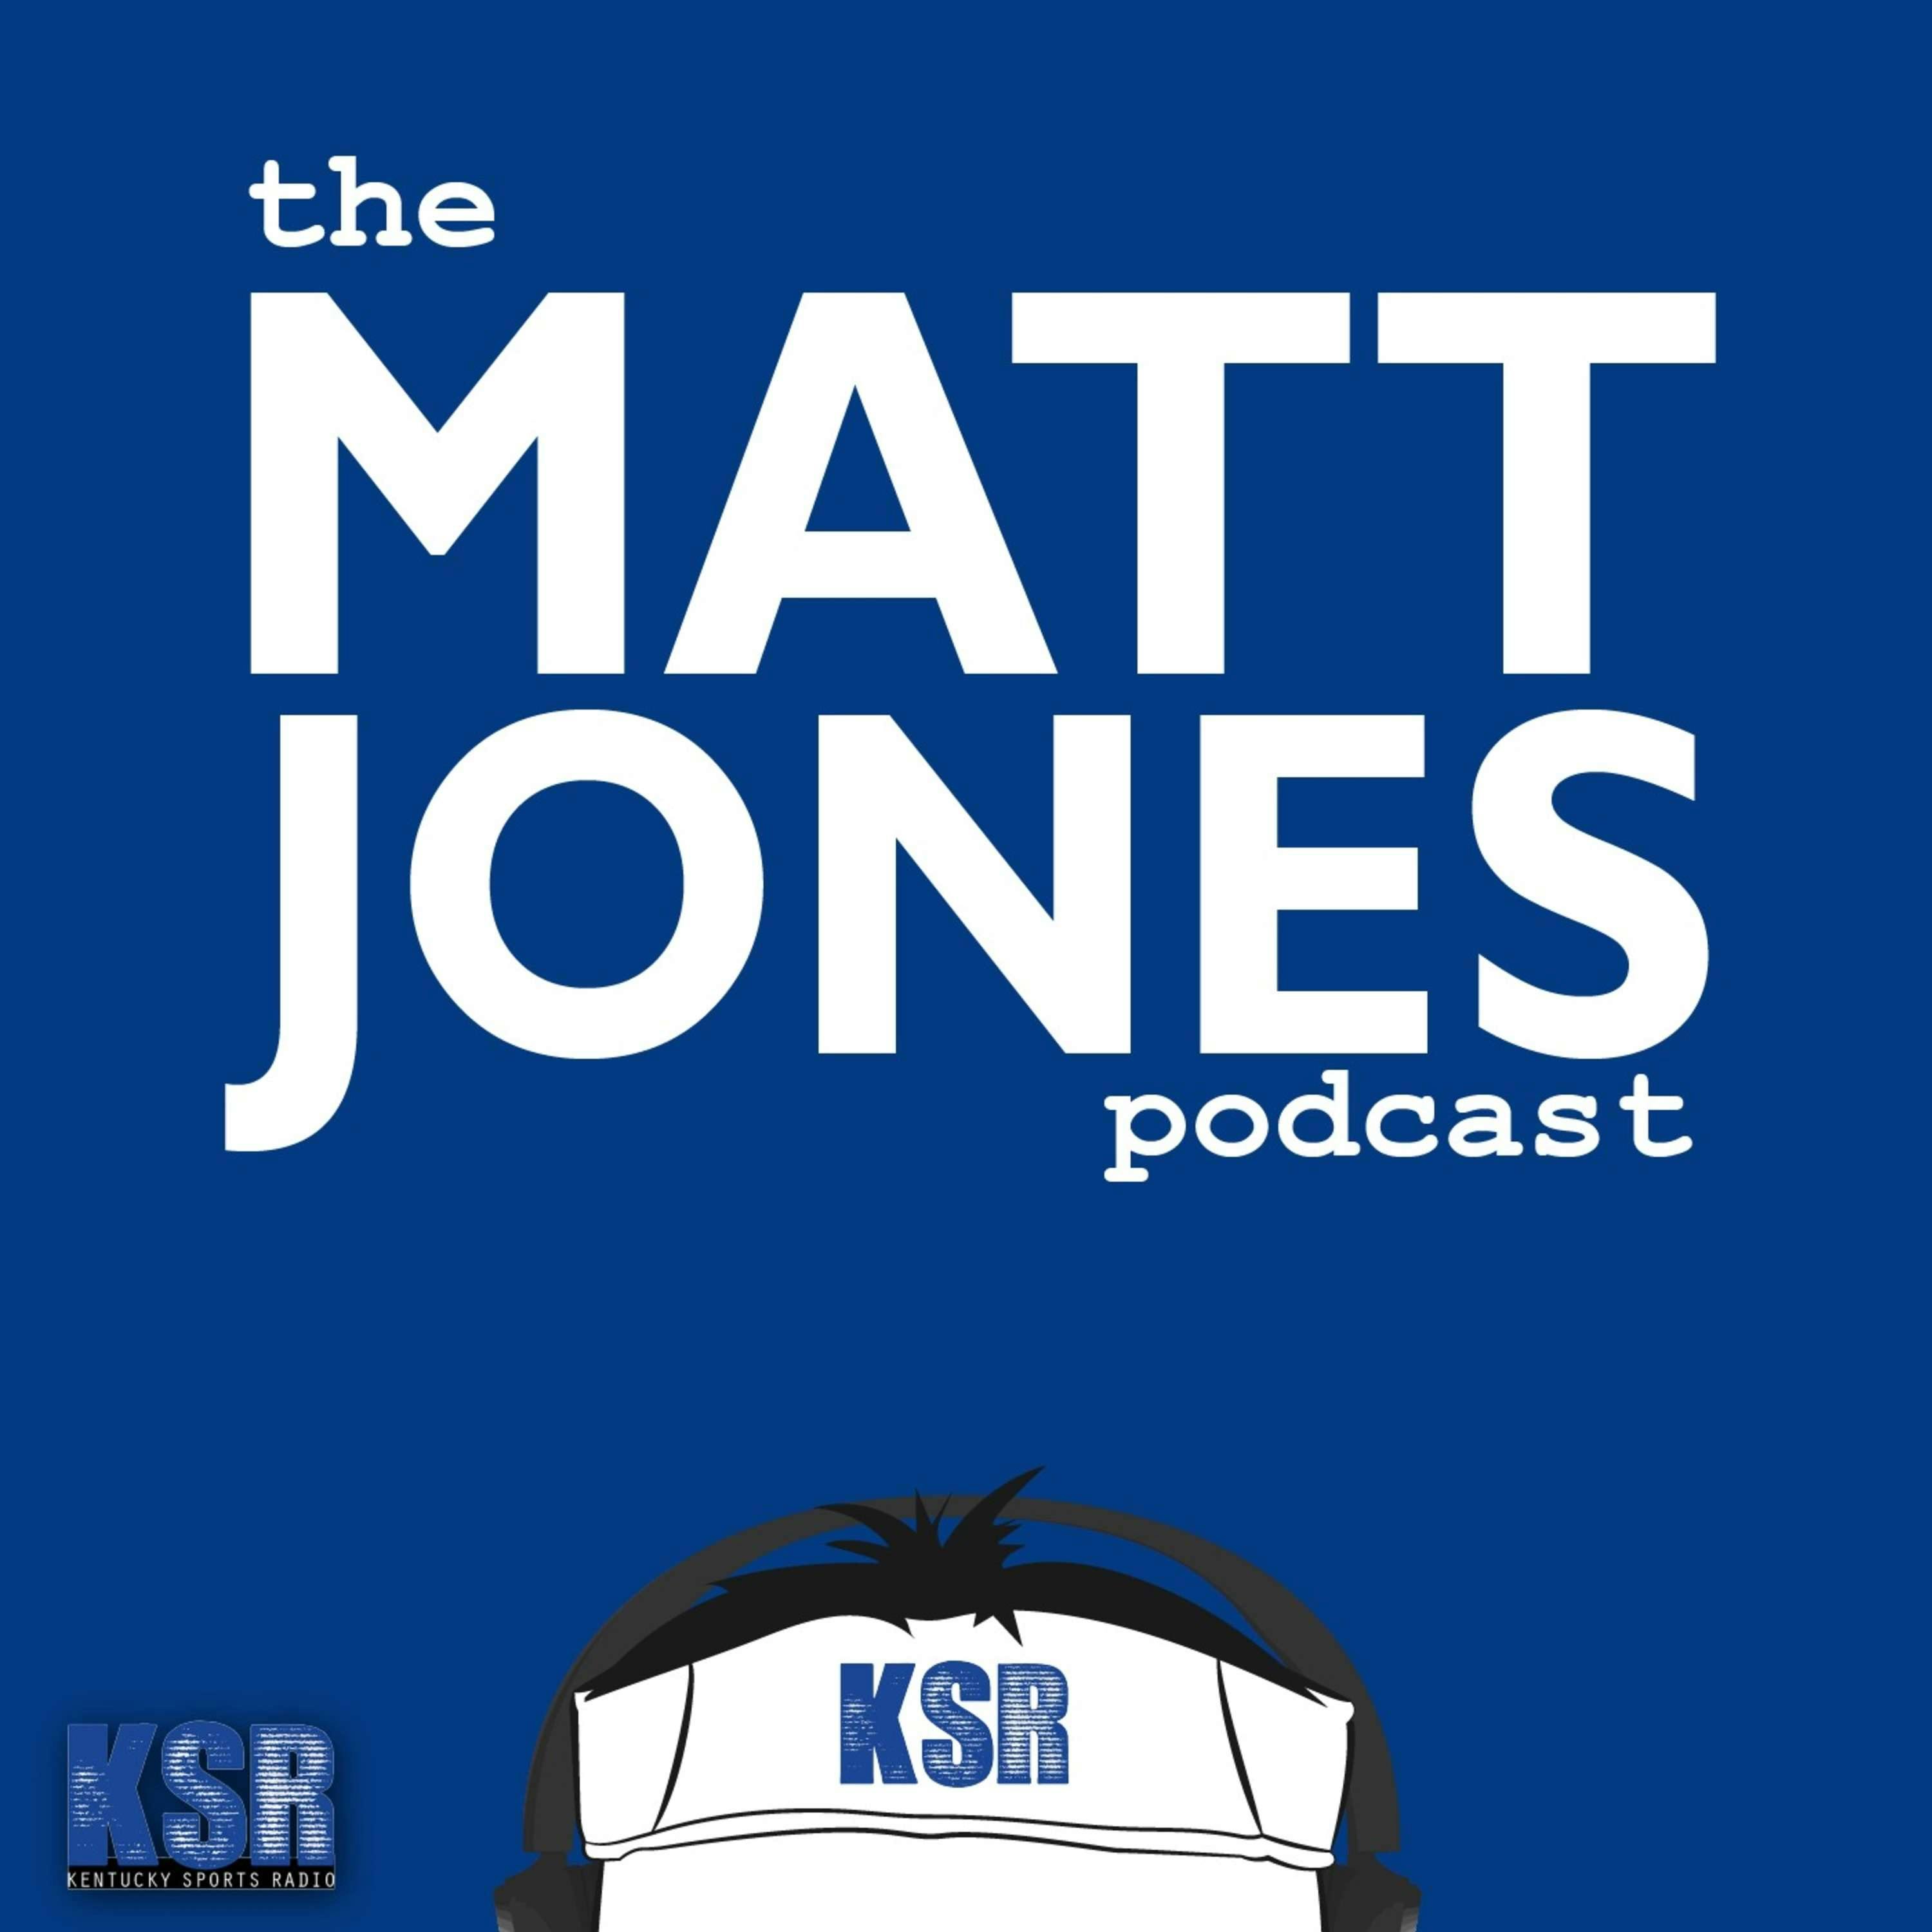 The Matt Jones Podcast: E59 The Return of the Podcast with Tony Vanetti